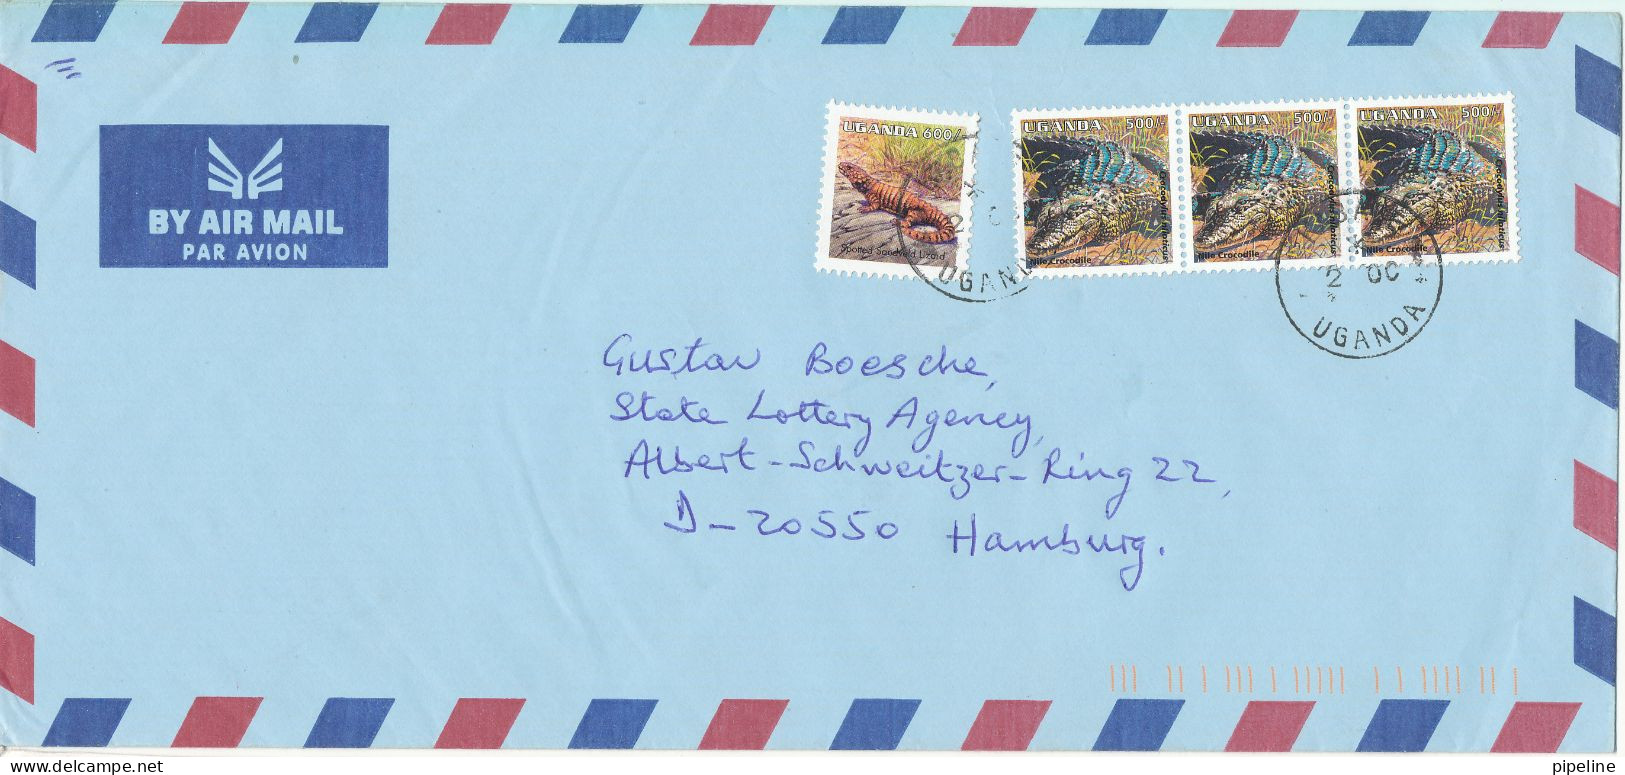 Uganda Air Mail Cover Sent To Germany 2000 CROCODILES - Uganda (1962-...)